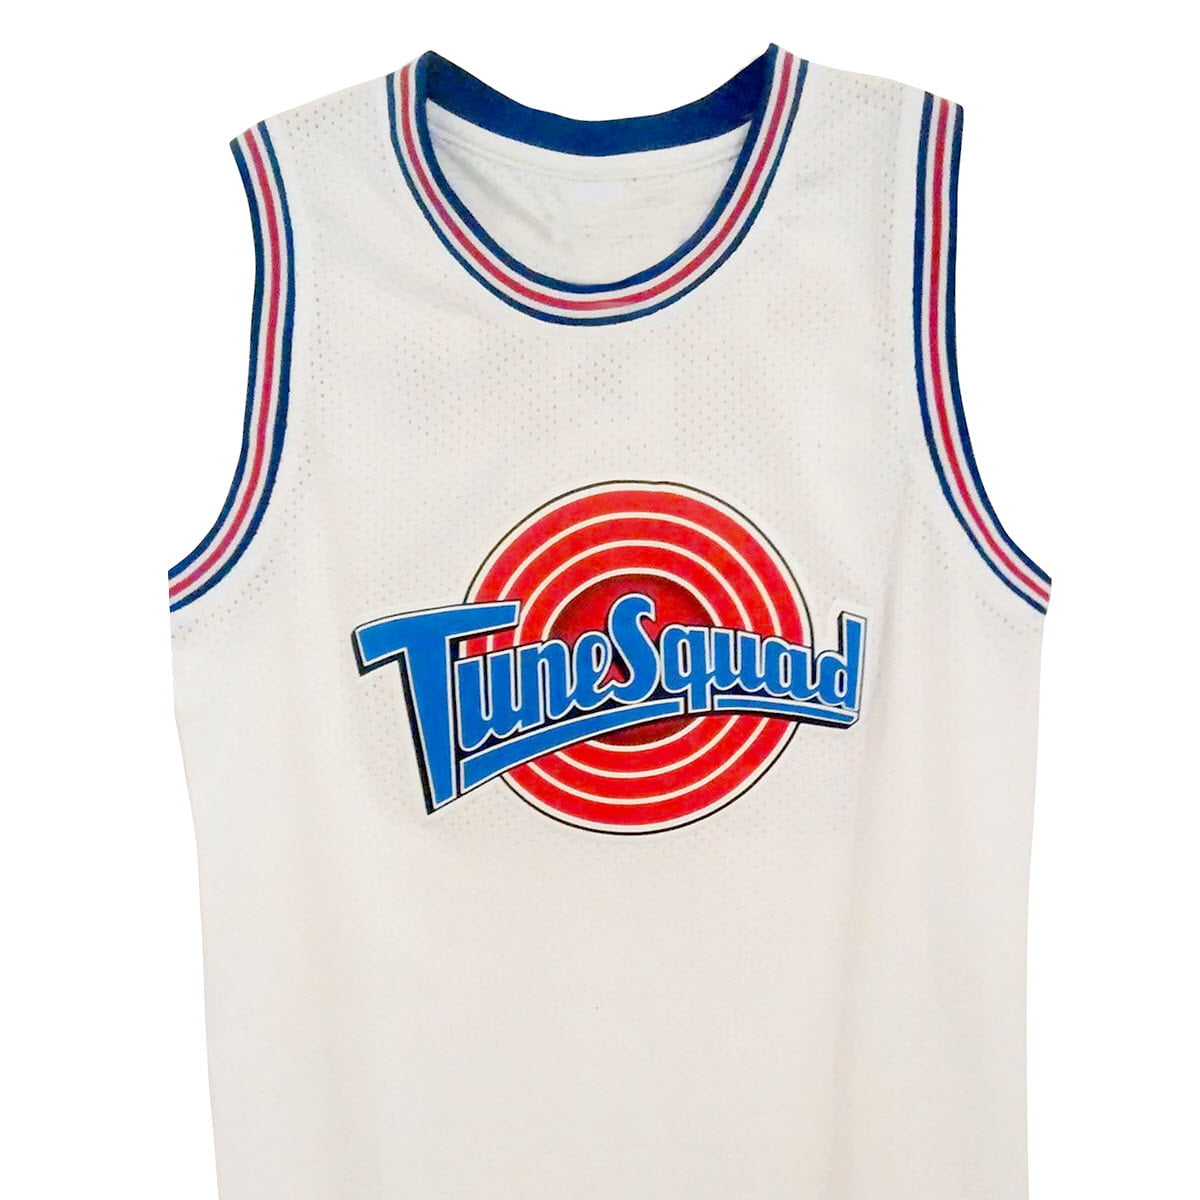 Bill Murray Tune Squad Jersey Space Jam Basketball 22 Movie Costume Uniform Gift 